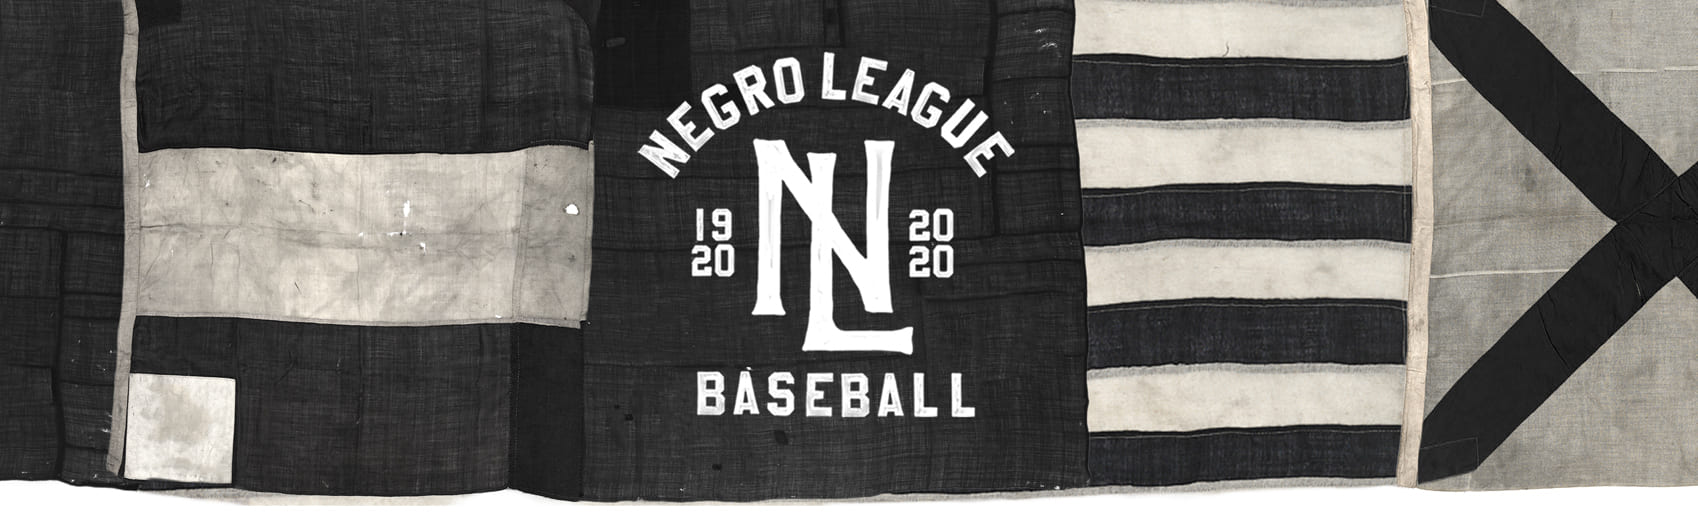 negro league 100th anniversary shirt